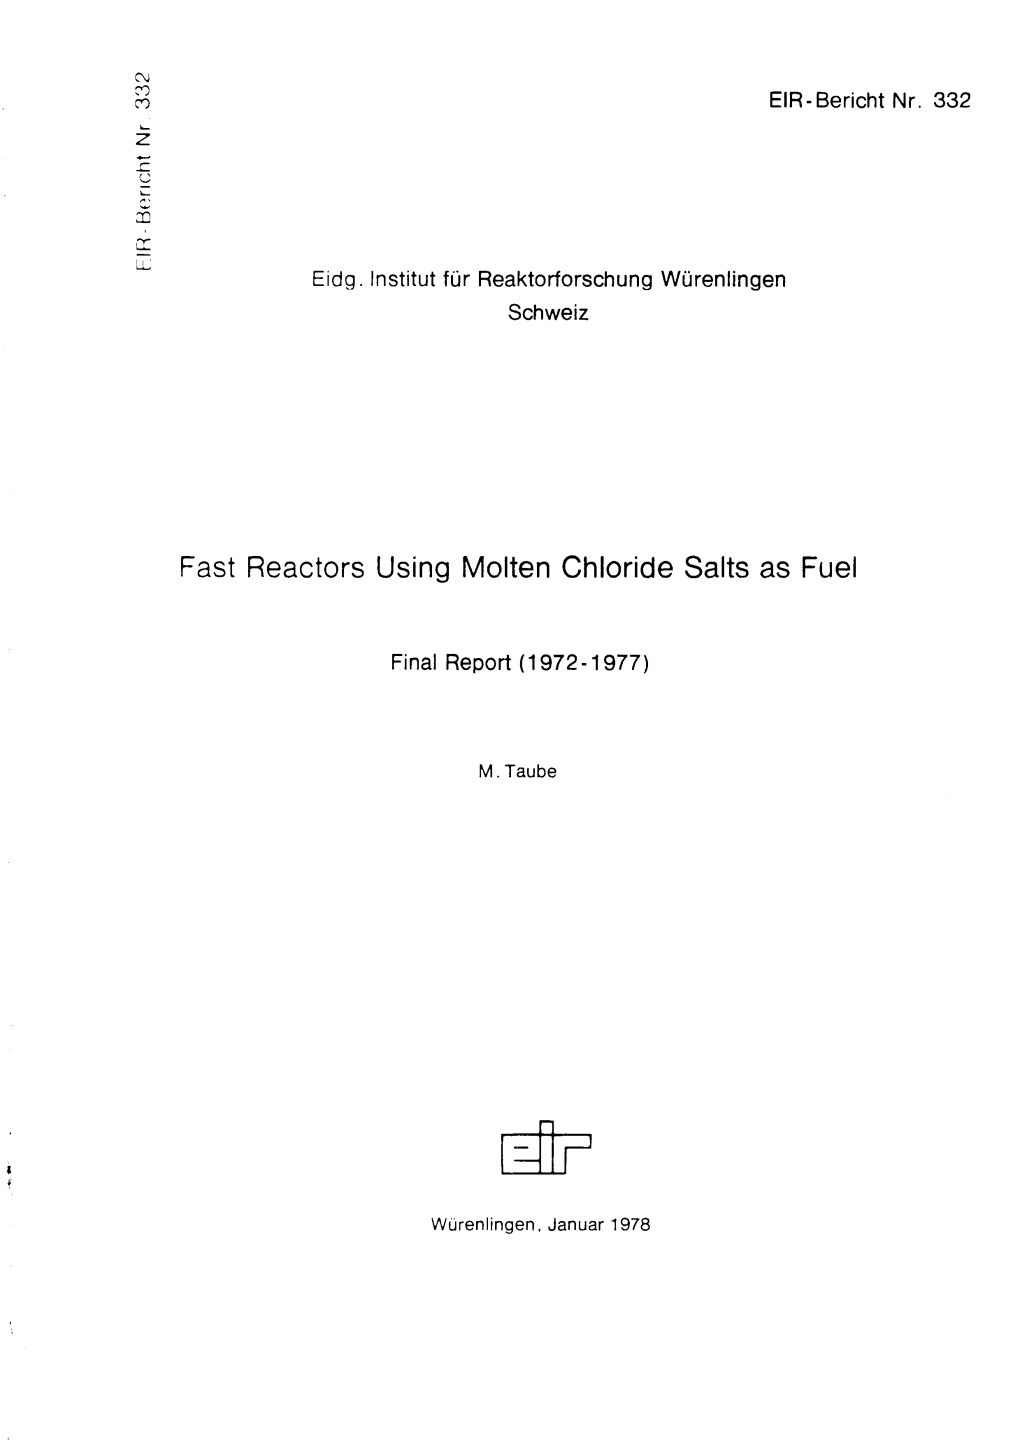 Fast Reactors Using Molten Chloride Salts As Fuel